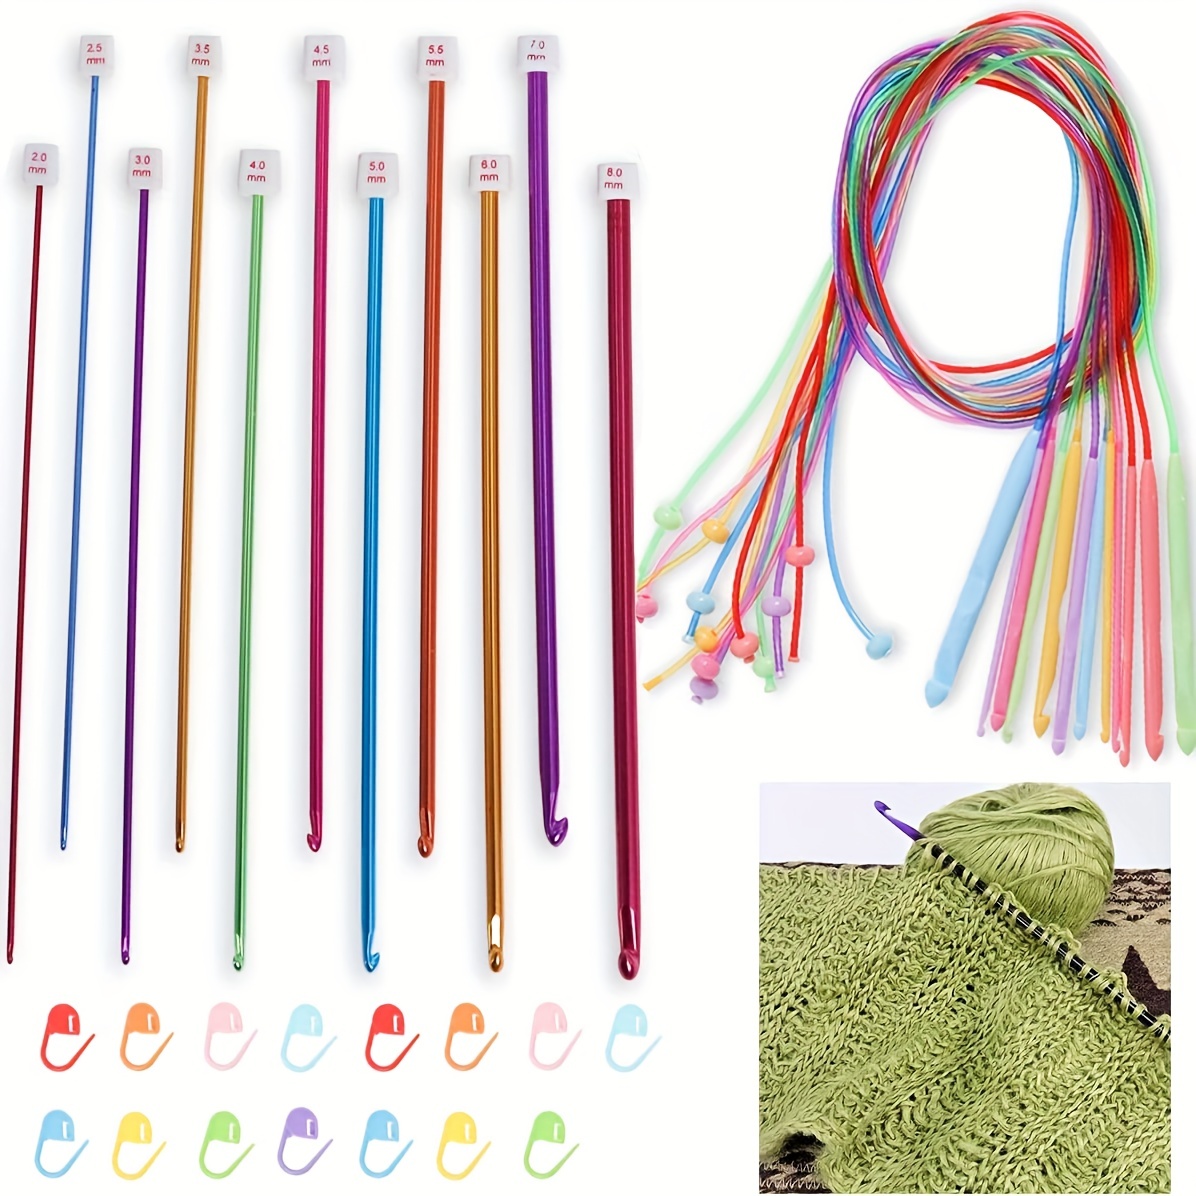 170mm Aluminum Crochet Hook Needles with Plastic Handle 2.5mm/3.0